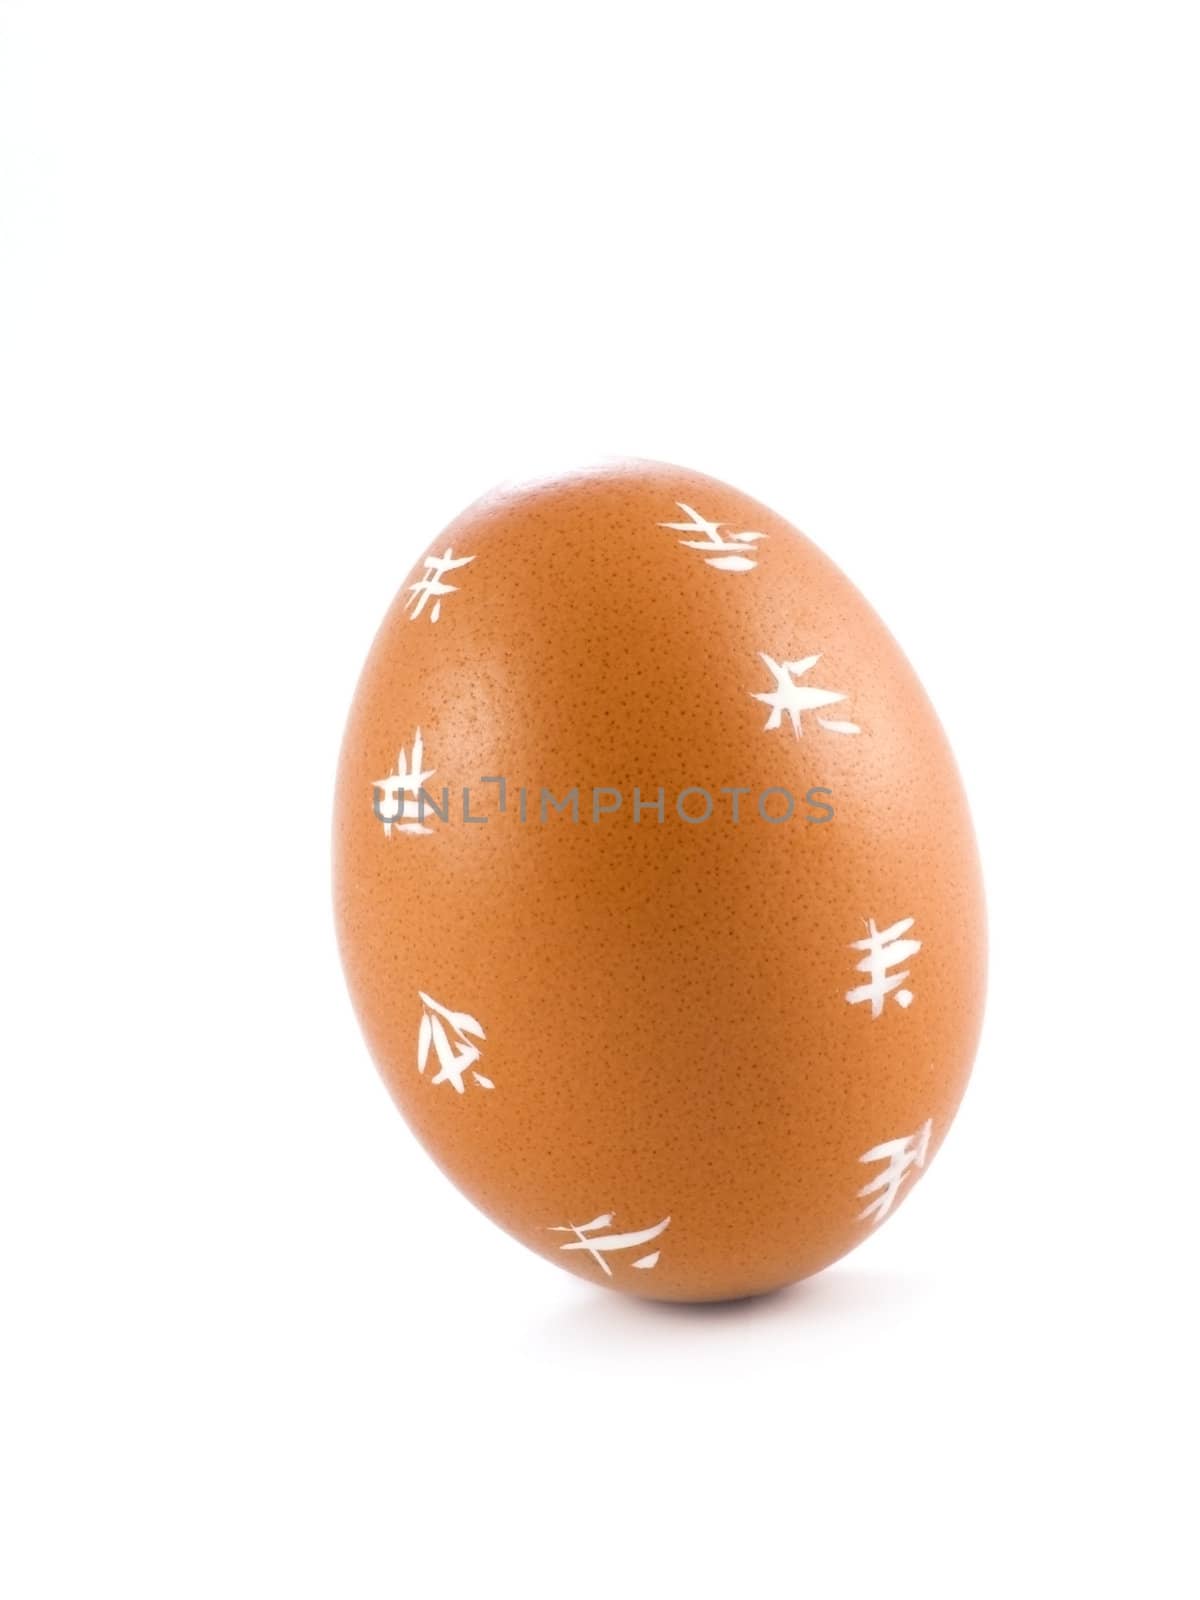 Easter Eggs by iwka